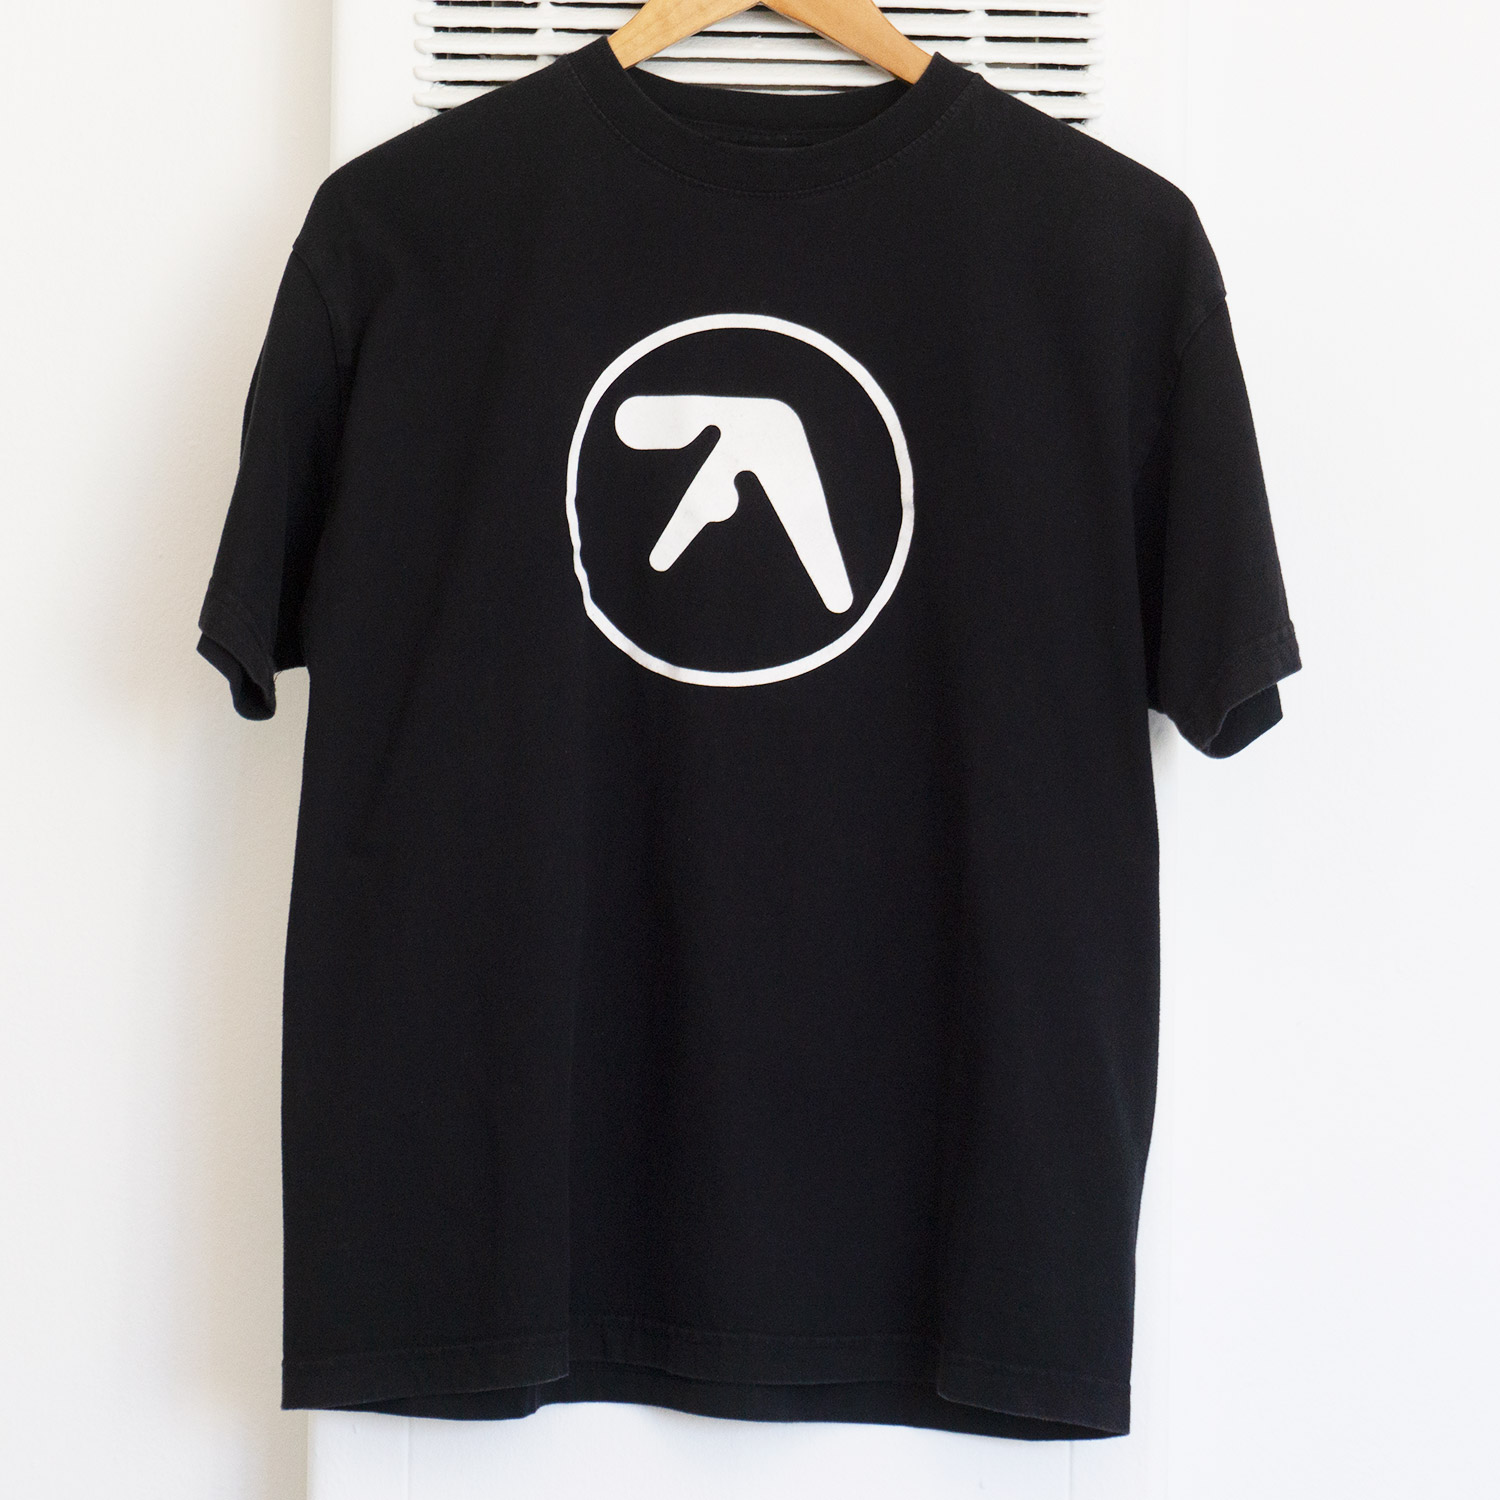 Wokeyia Baby Aphex_Twin_Logo_Design Black Tshirts Cute T-Shirt for Baby Boy 